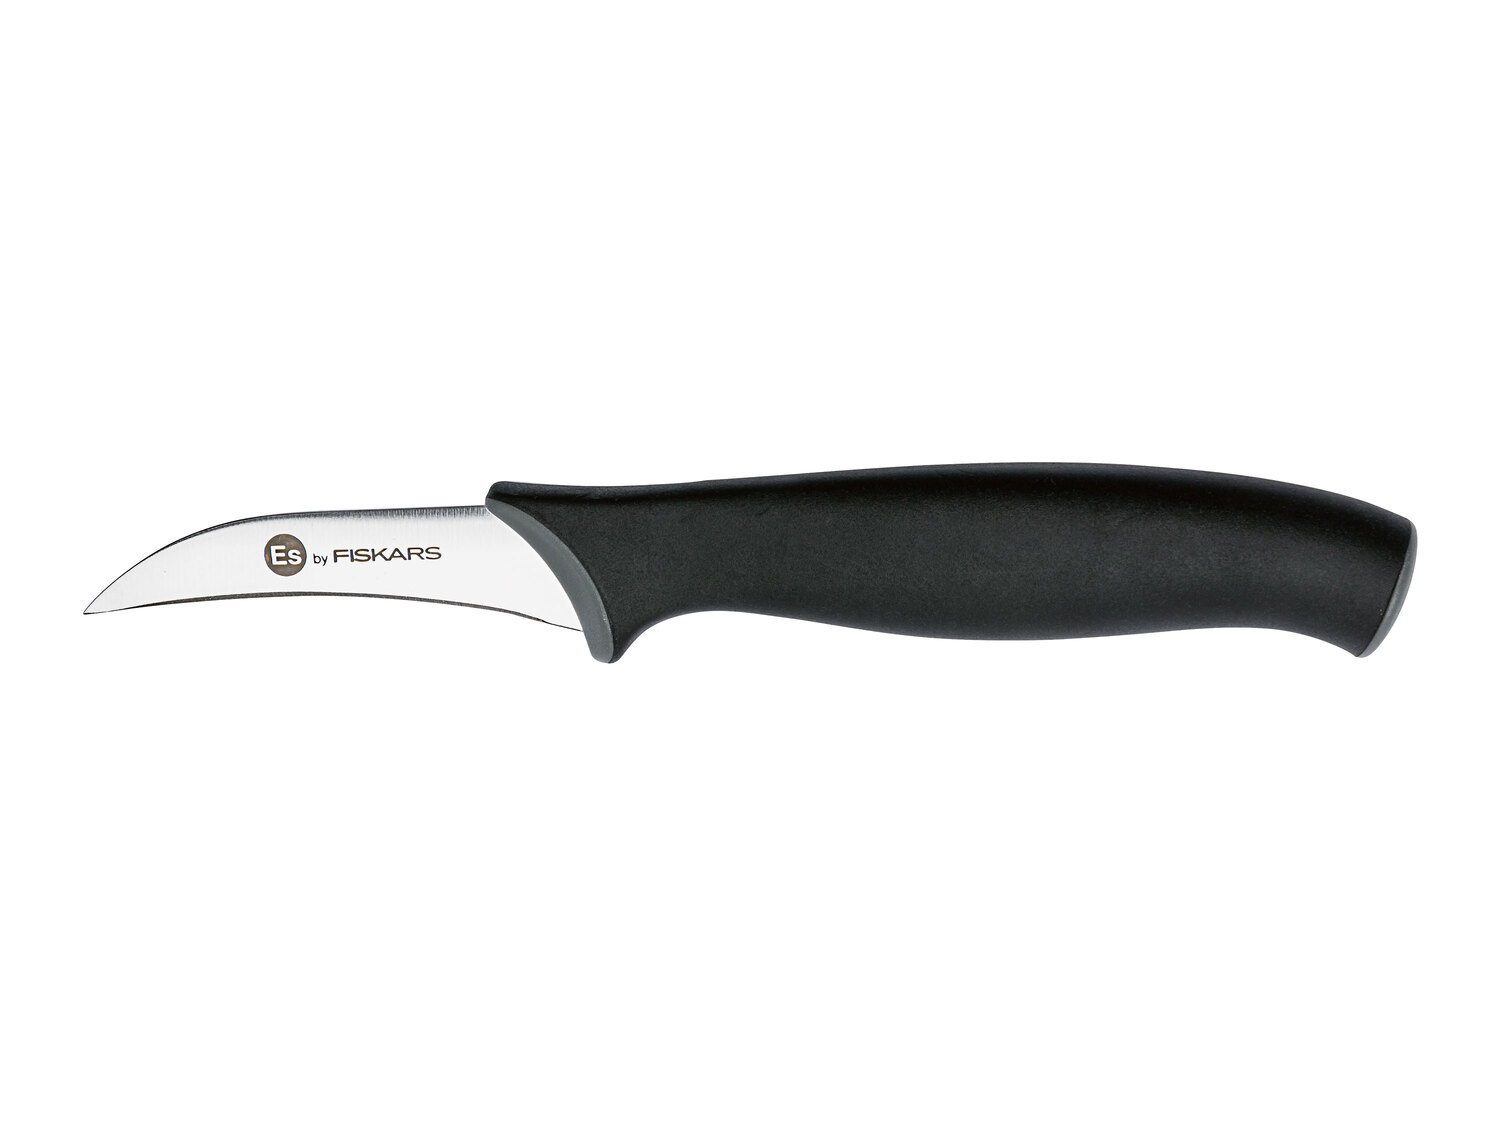 Fiskars nożyk kuchenny , cena 19,99 PLN  
5 wzorów
Opis